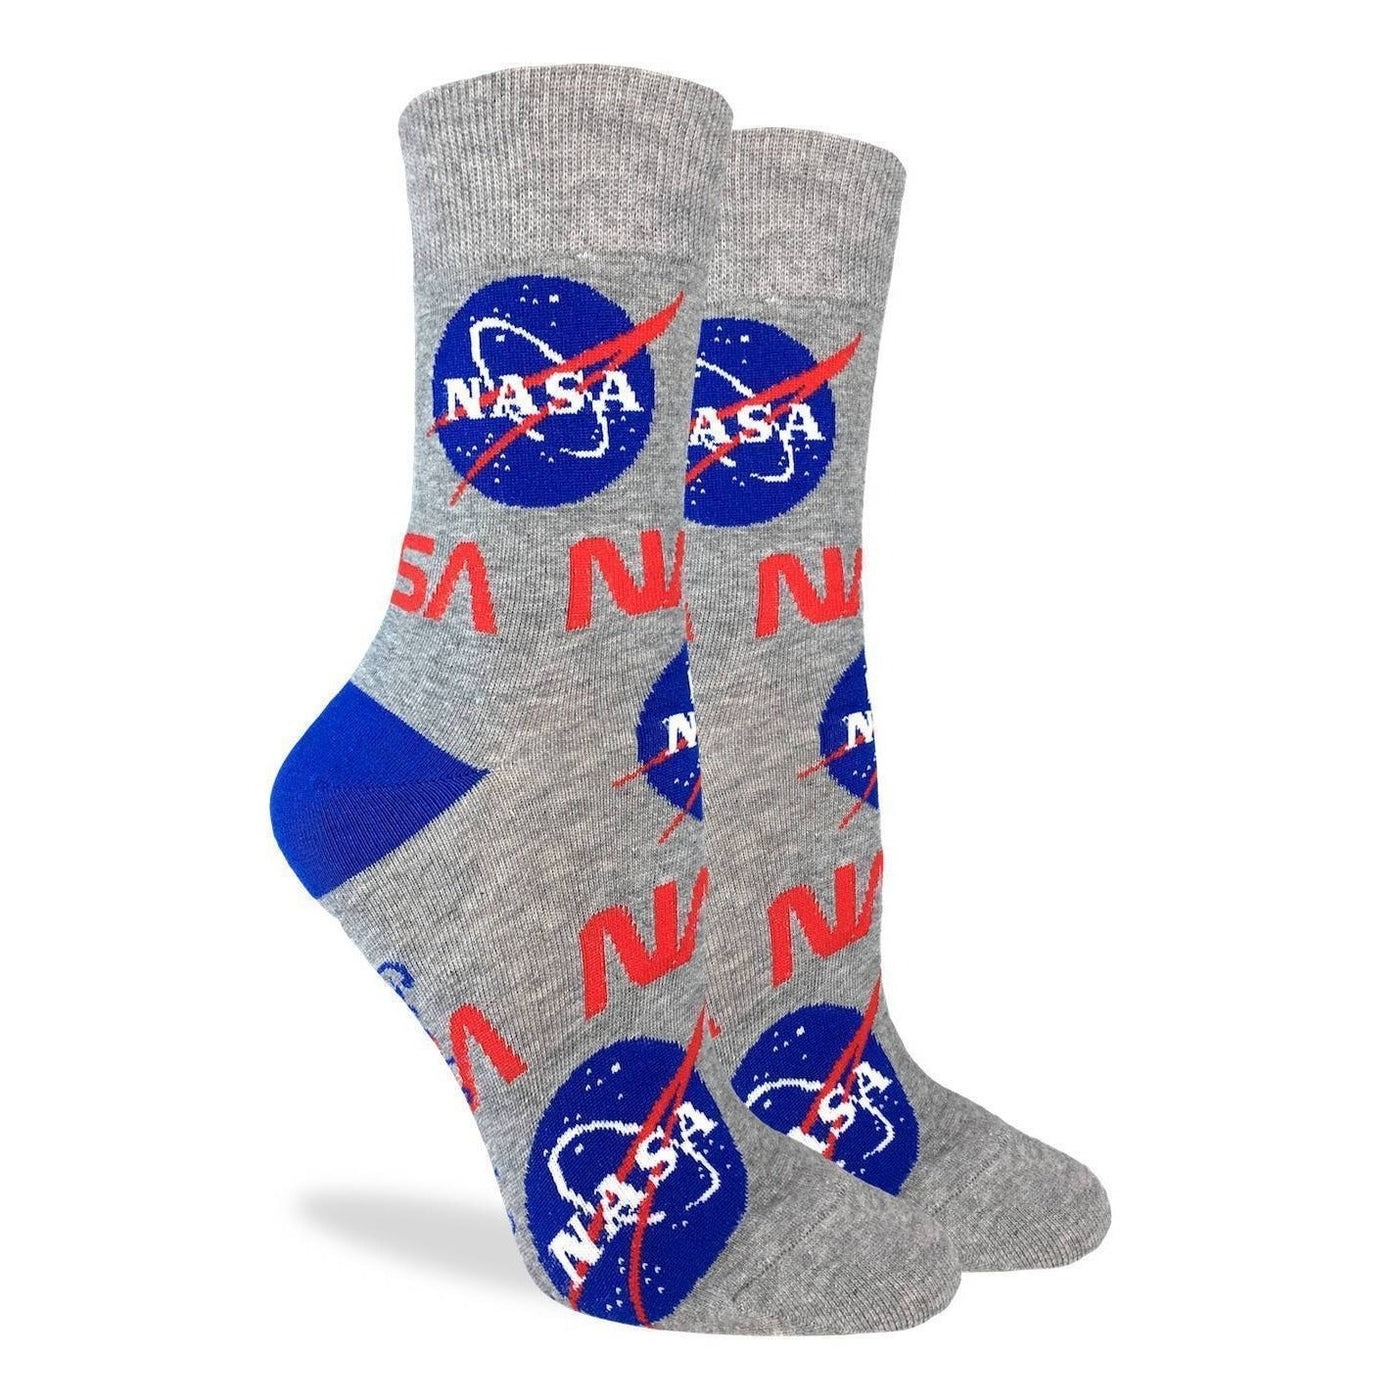 "NASA" Cotton Crew Socks by Good Luck Sock